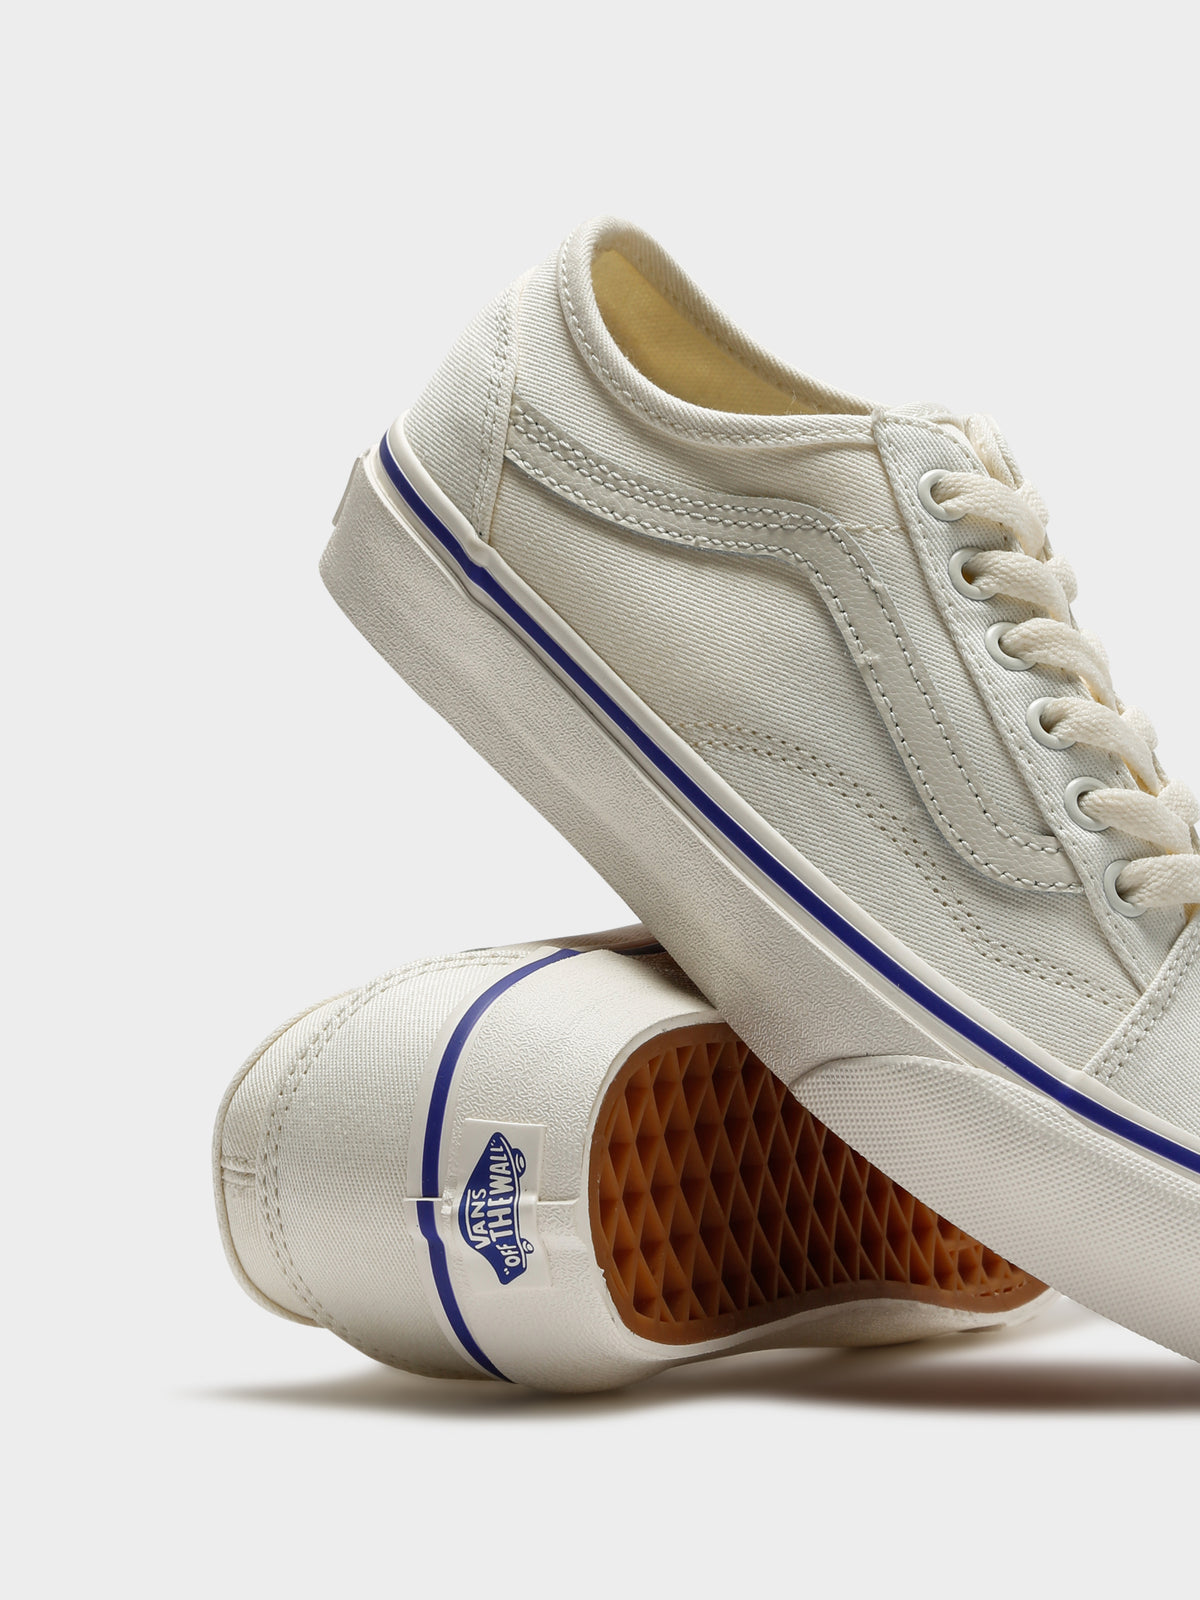 Unisex Old Skool Tapered Retro Cali Sneakers in Marshmallow &amp; Spectrum Blue